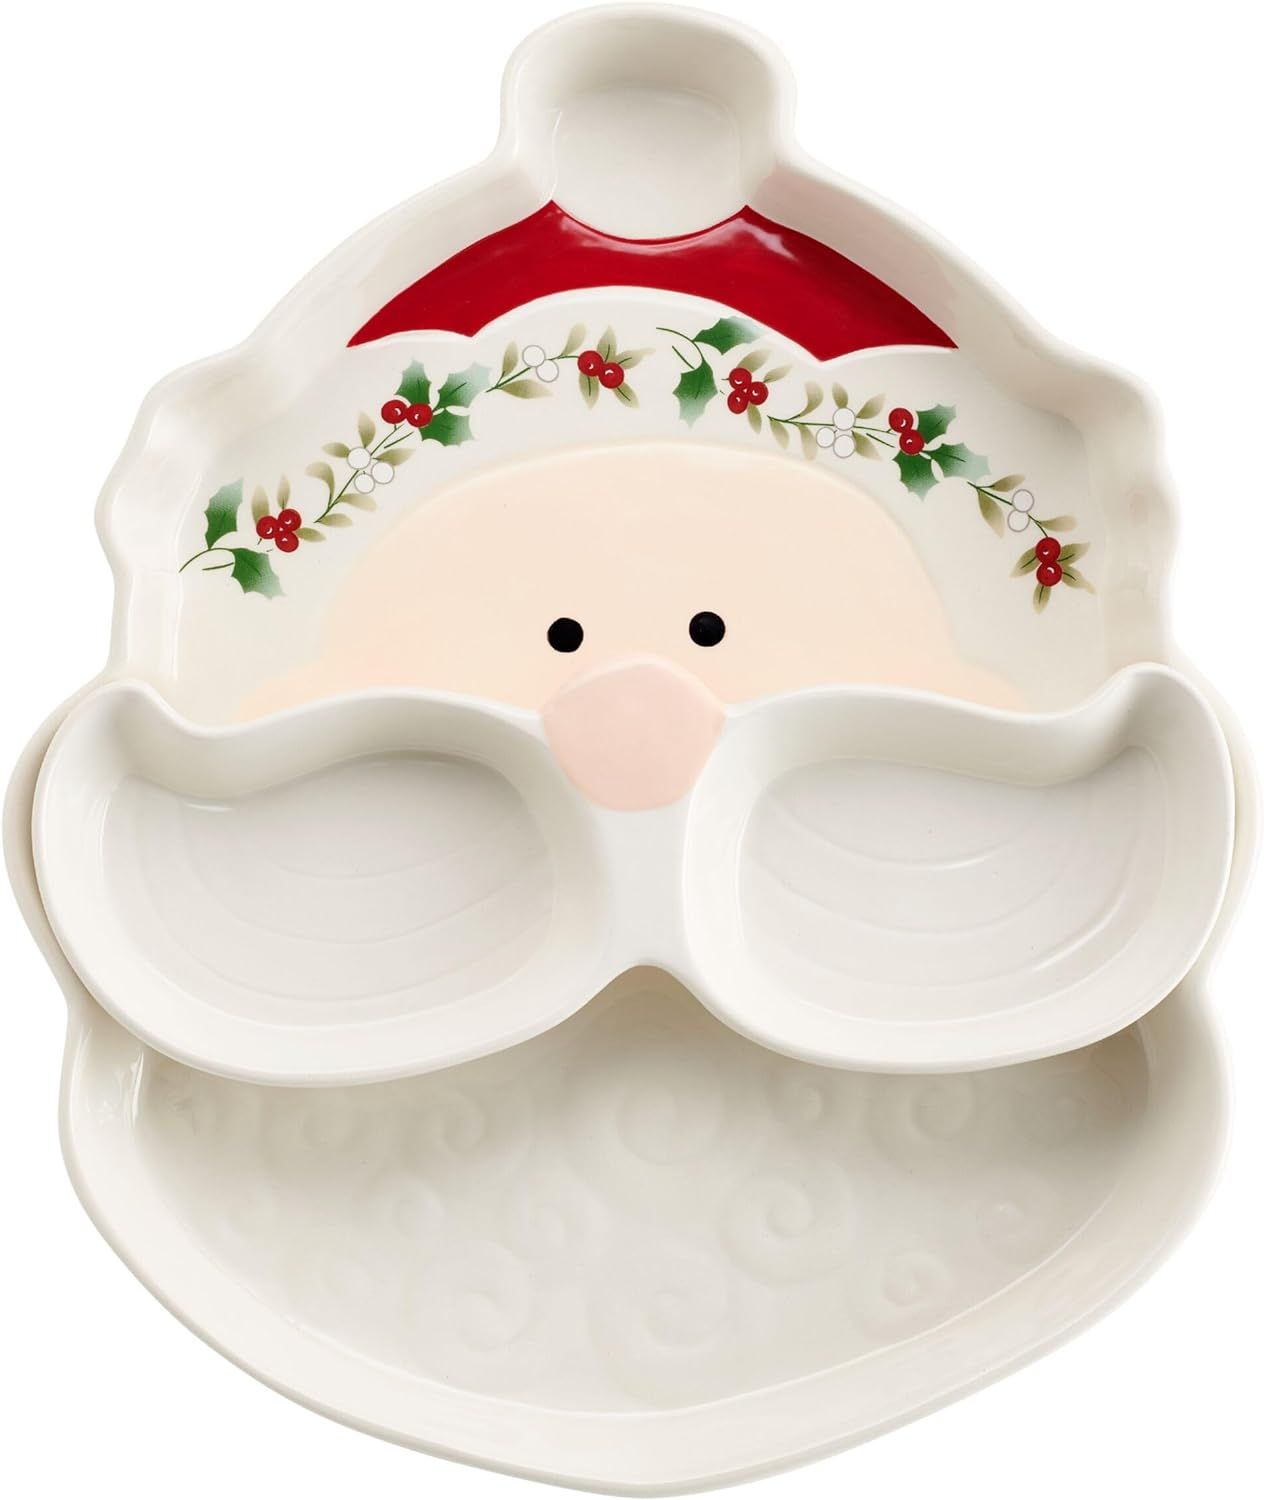 Pfaltzgraff Winterberry Santa Platter Tray with Dip Bowls, 12 Inch, Multicolored | Amazon (US)